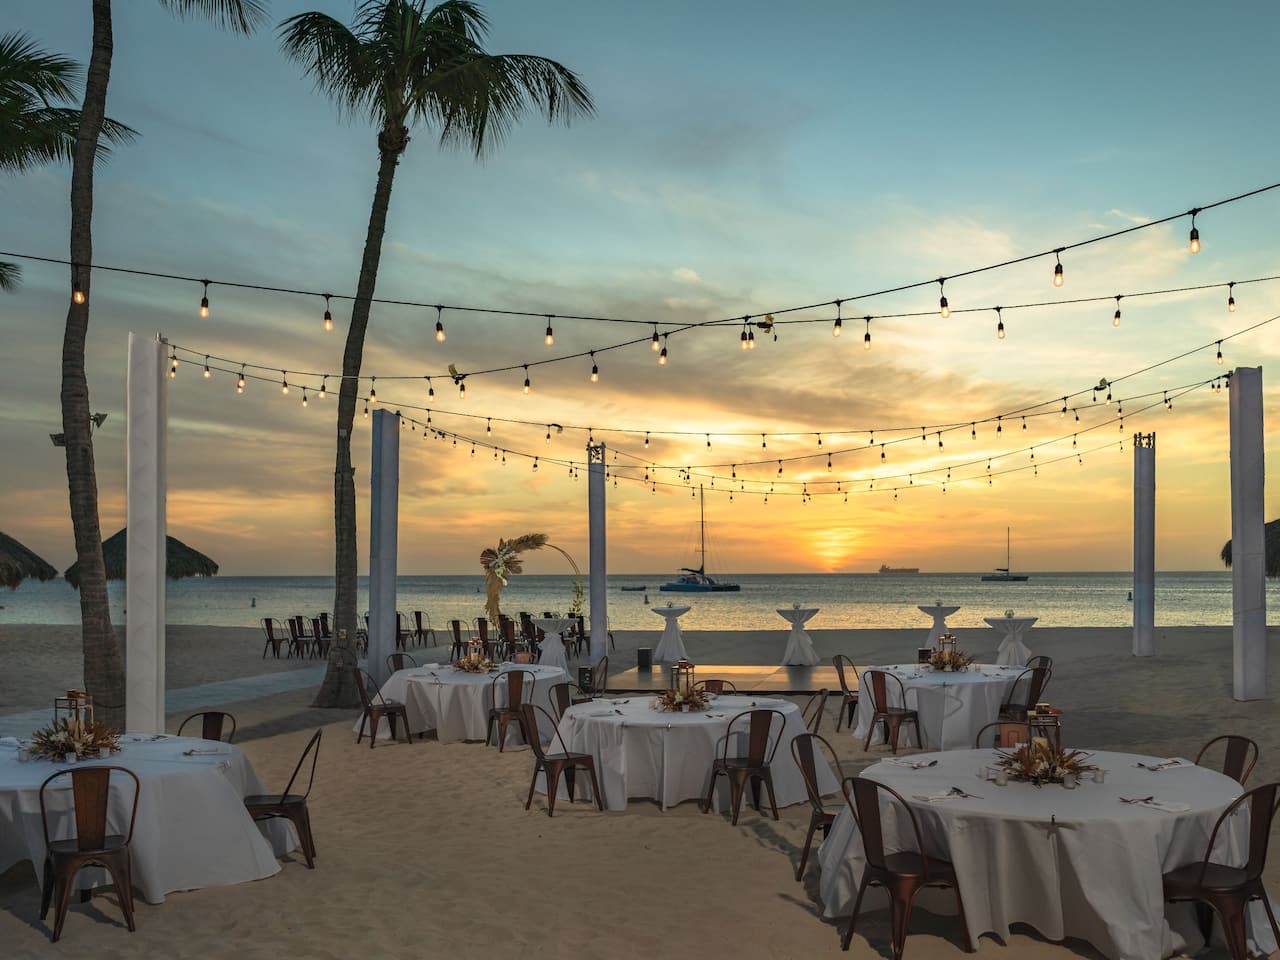 Outdoor wedding venue on the beach in Aruba